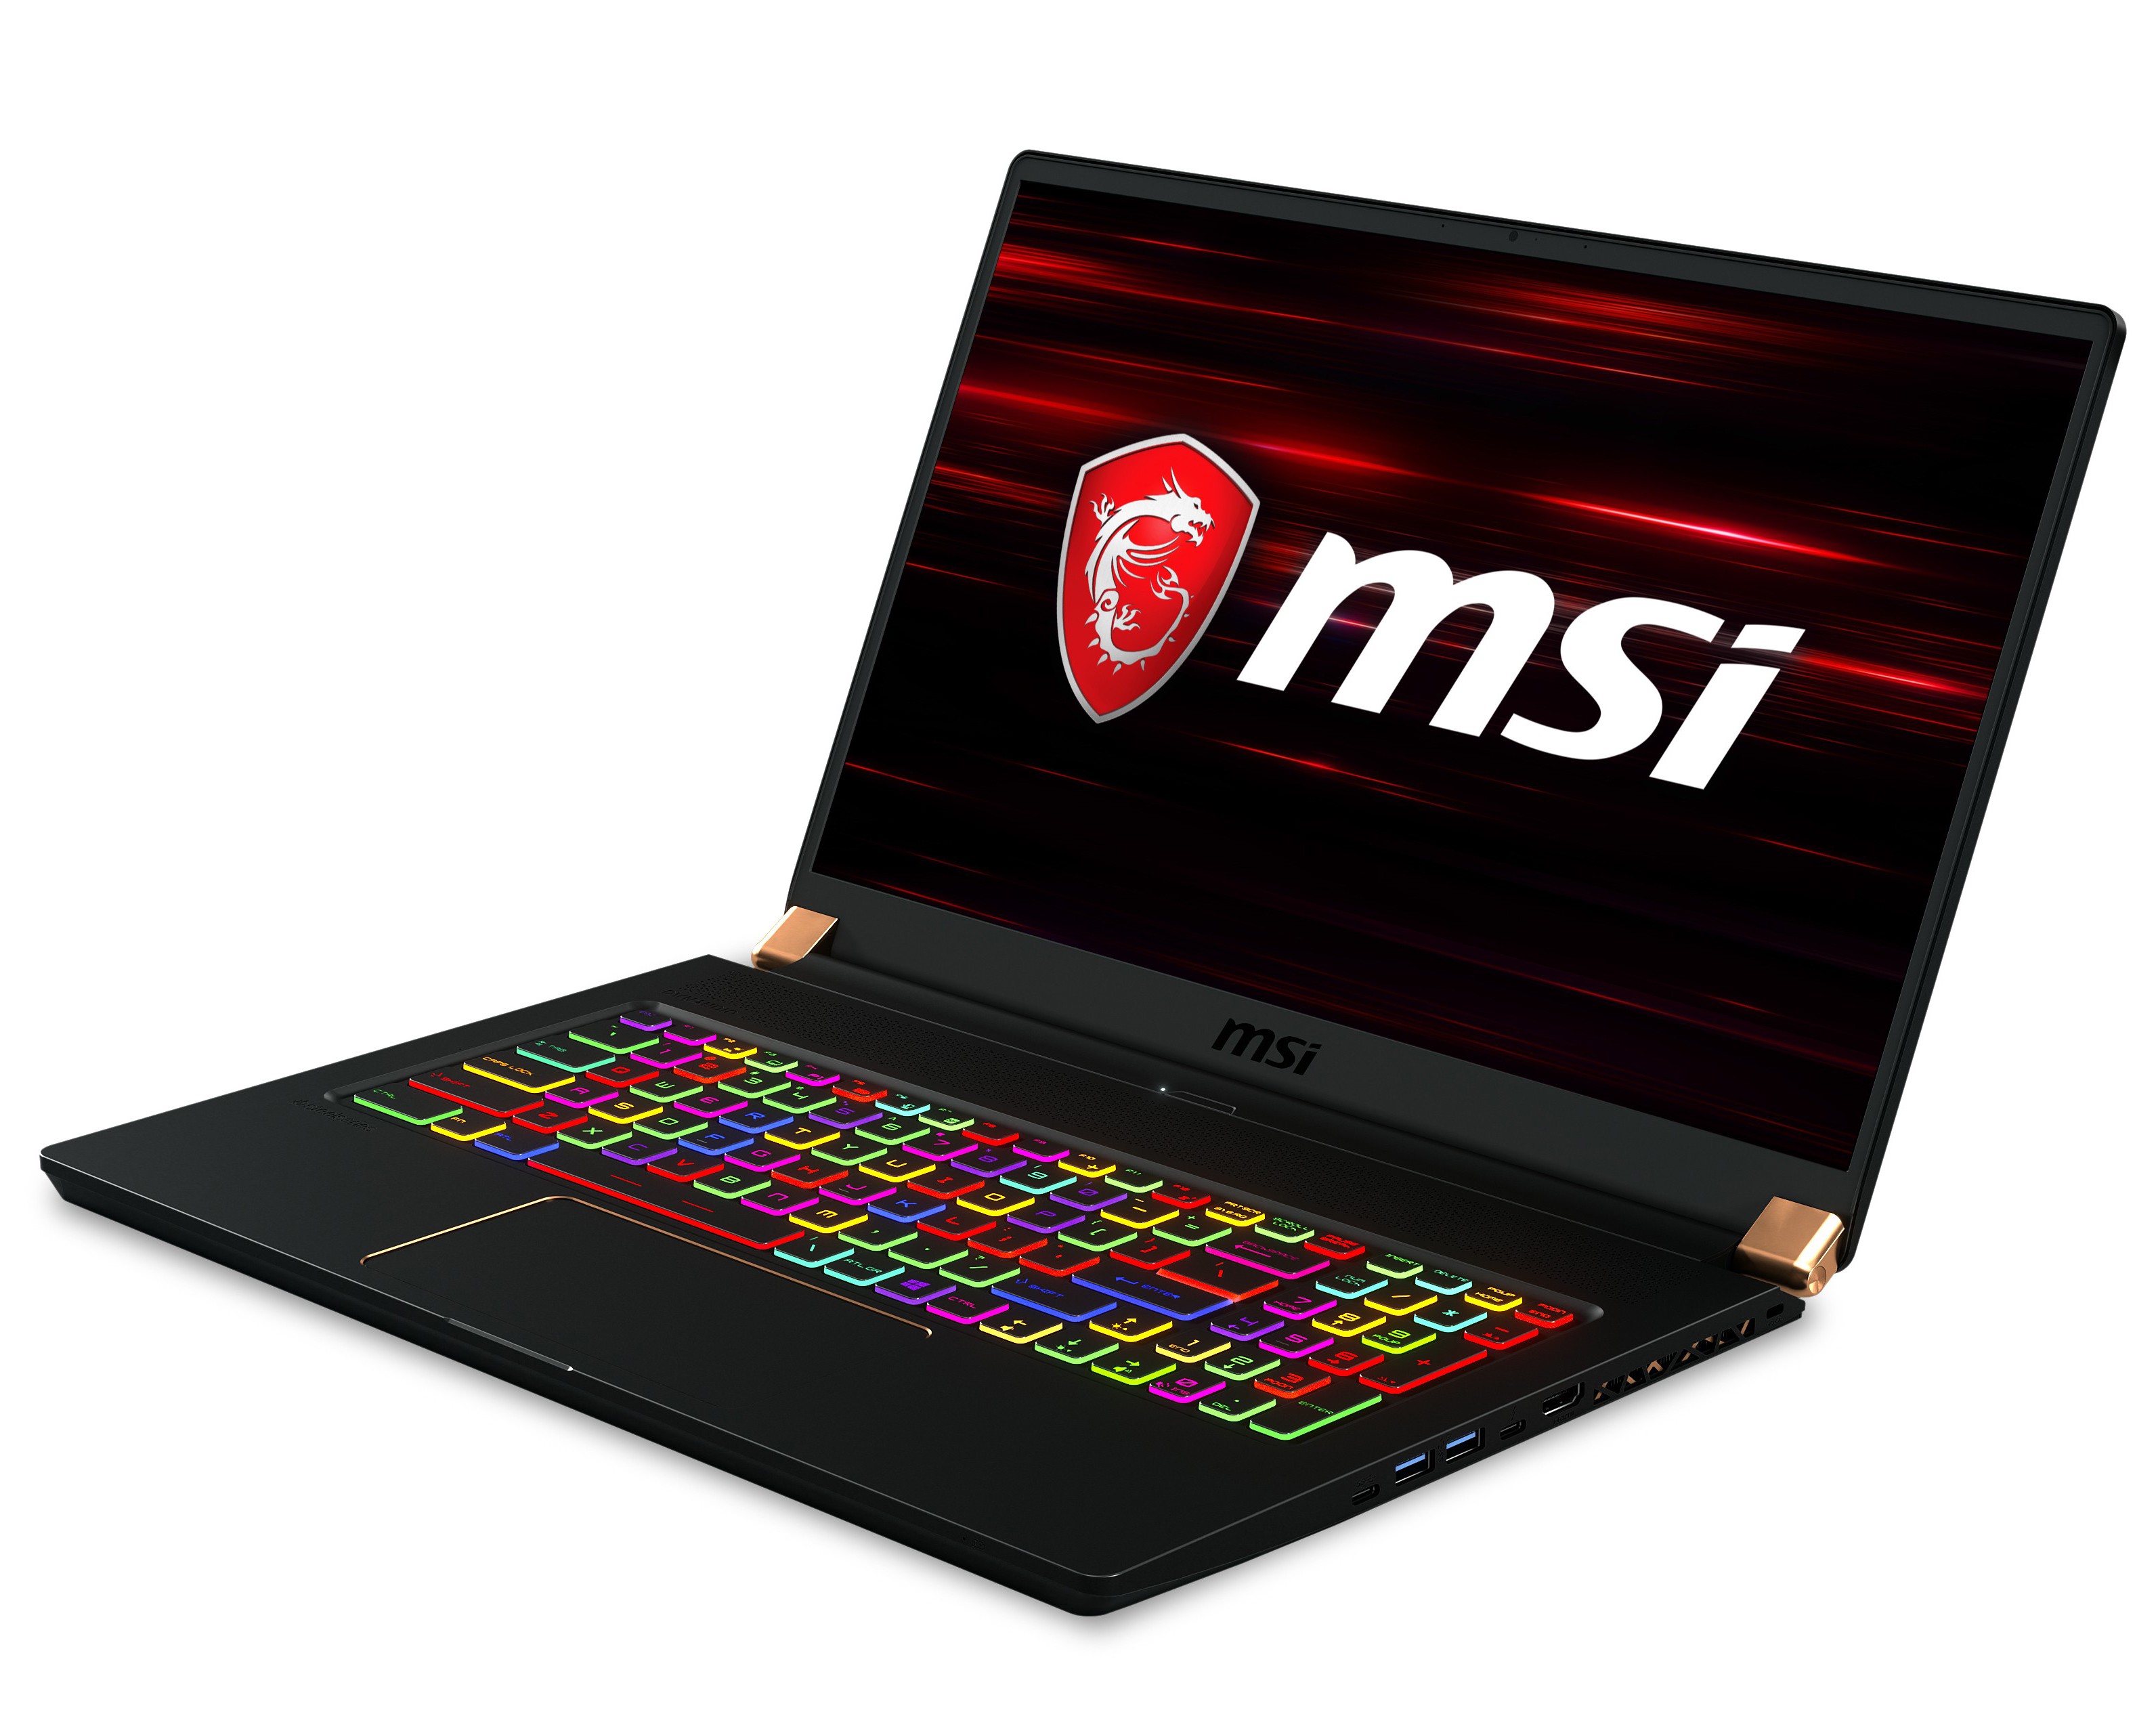 Msi gaming ssd. MSI g75 Stealth. MSI gs75 Stealth 9sf. MSI gs75 Stealth 10se. Ноутбук MSI Intel Core i7.